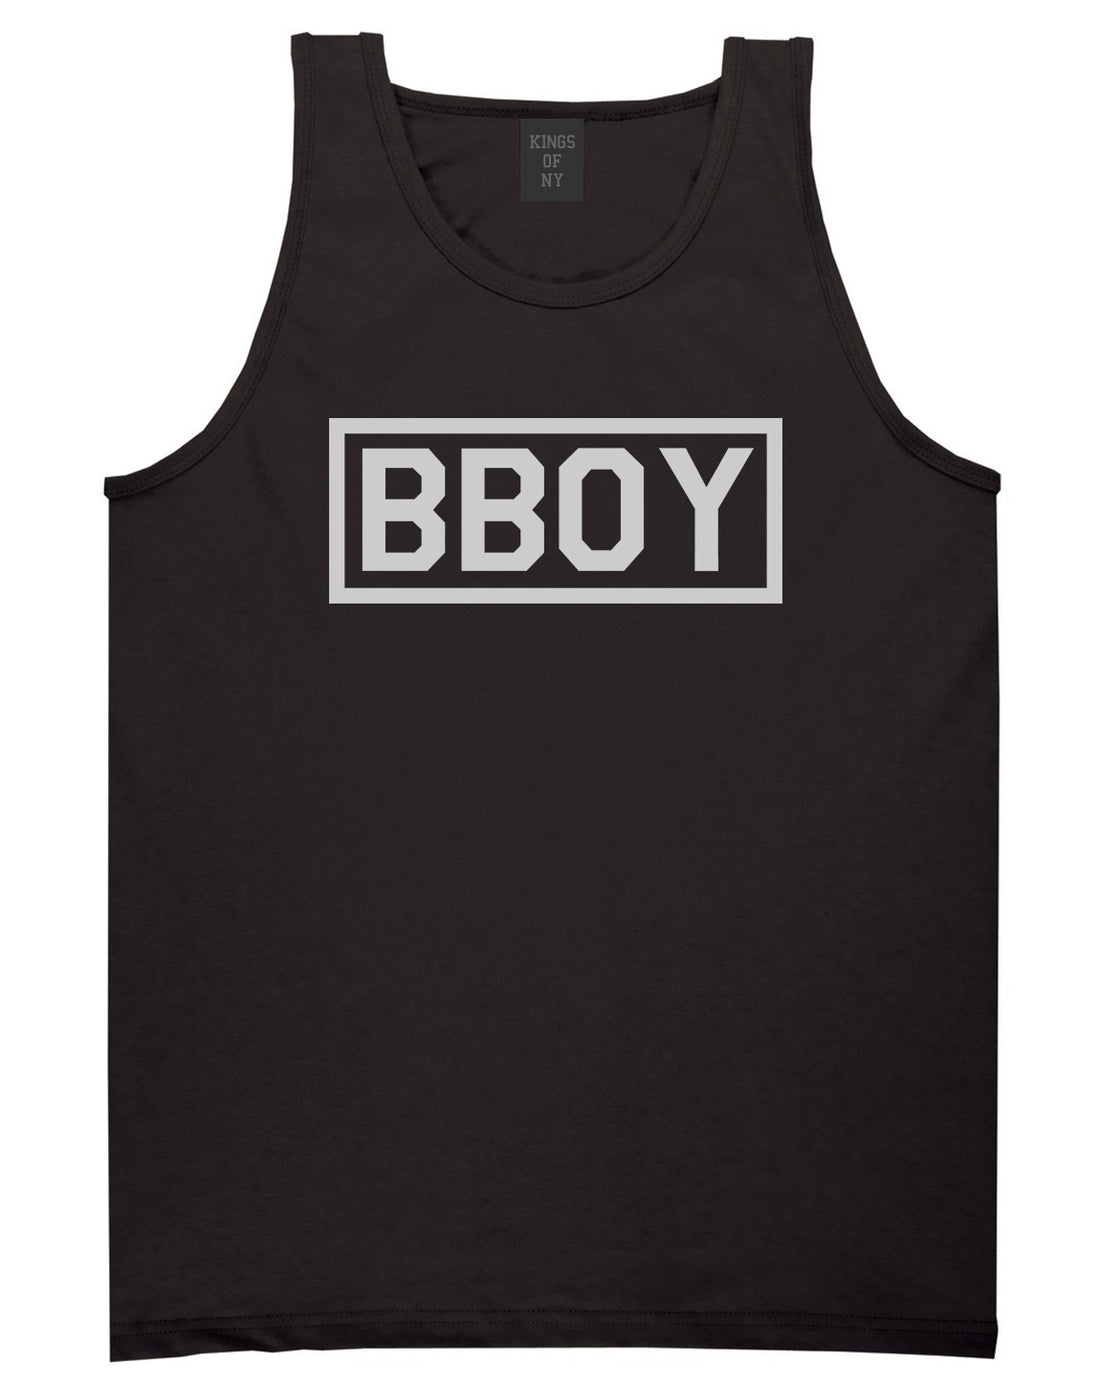 Bboy Breakdancing Black Tank Top Shirt by Kings Of NY